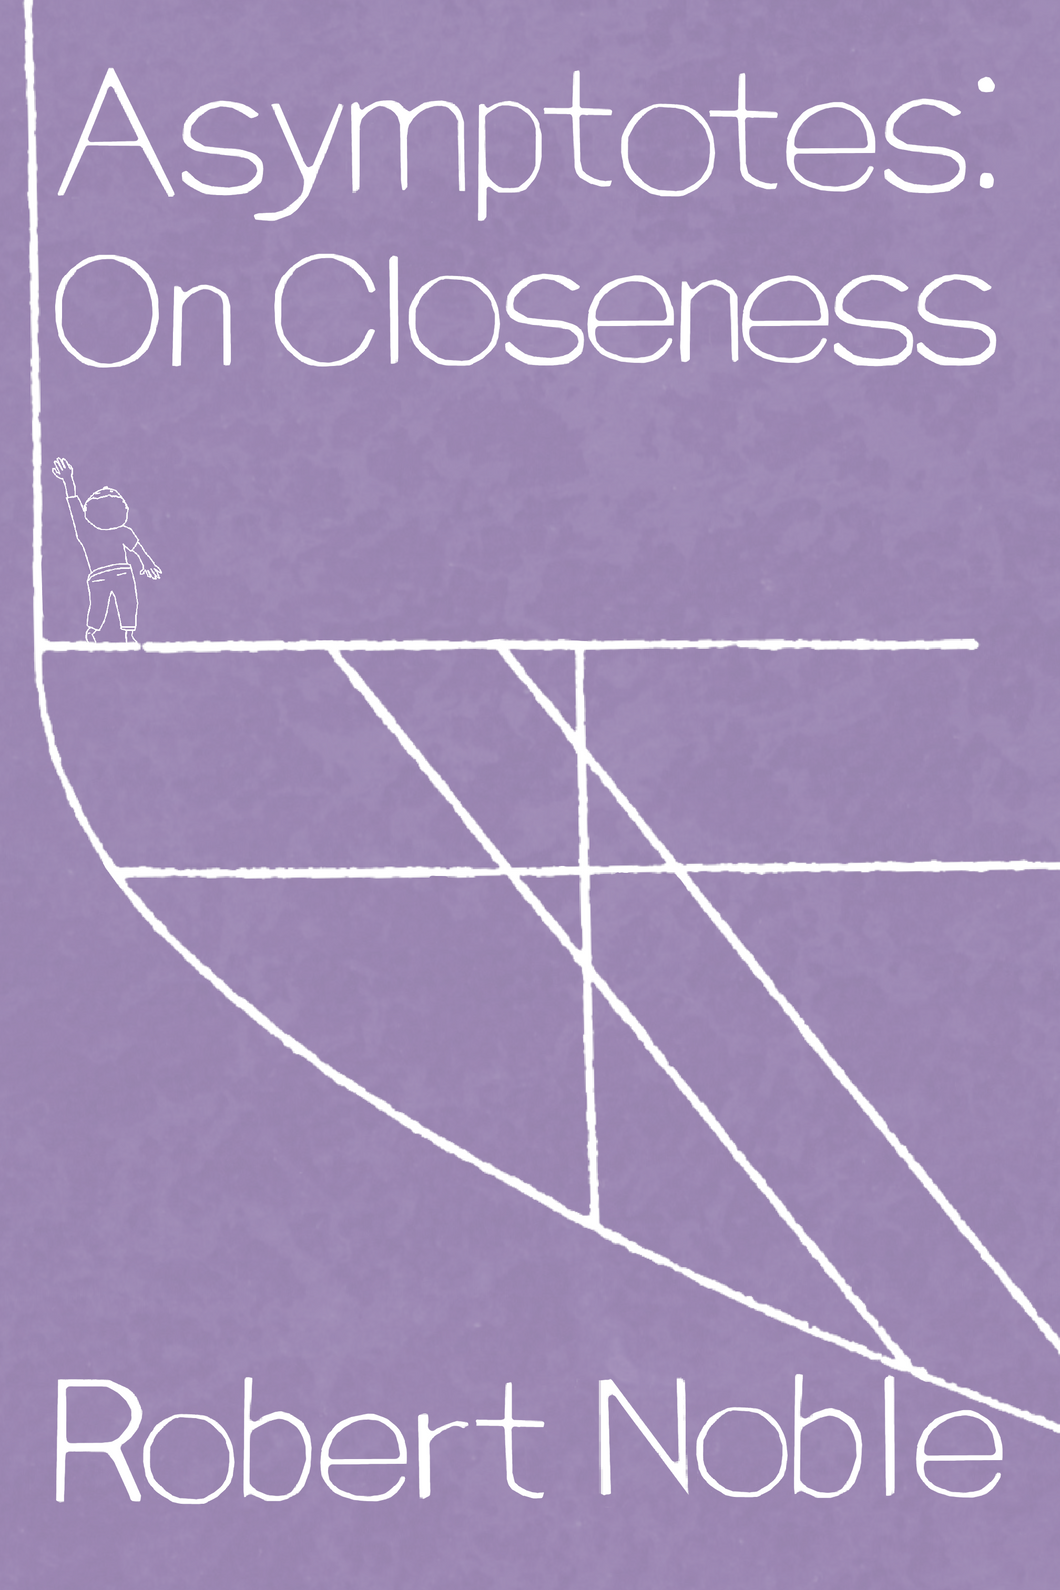 Asymptotes: On Closeness, by Robert Noble-Print Books-Bottlecap Press